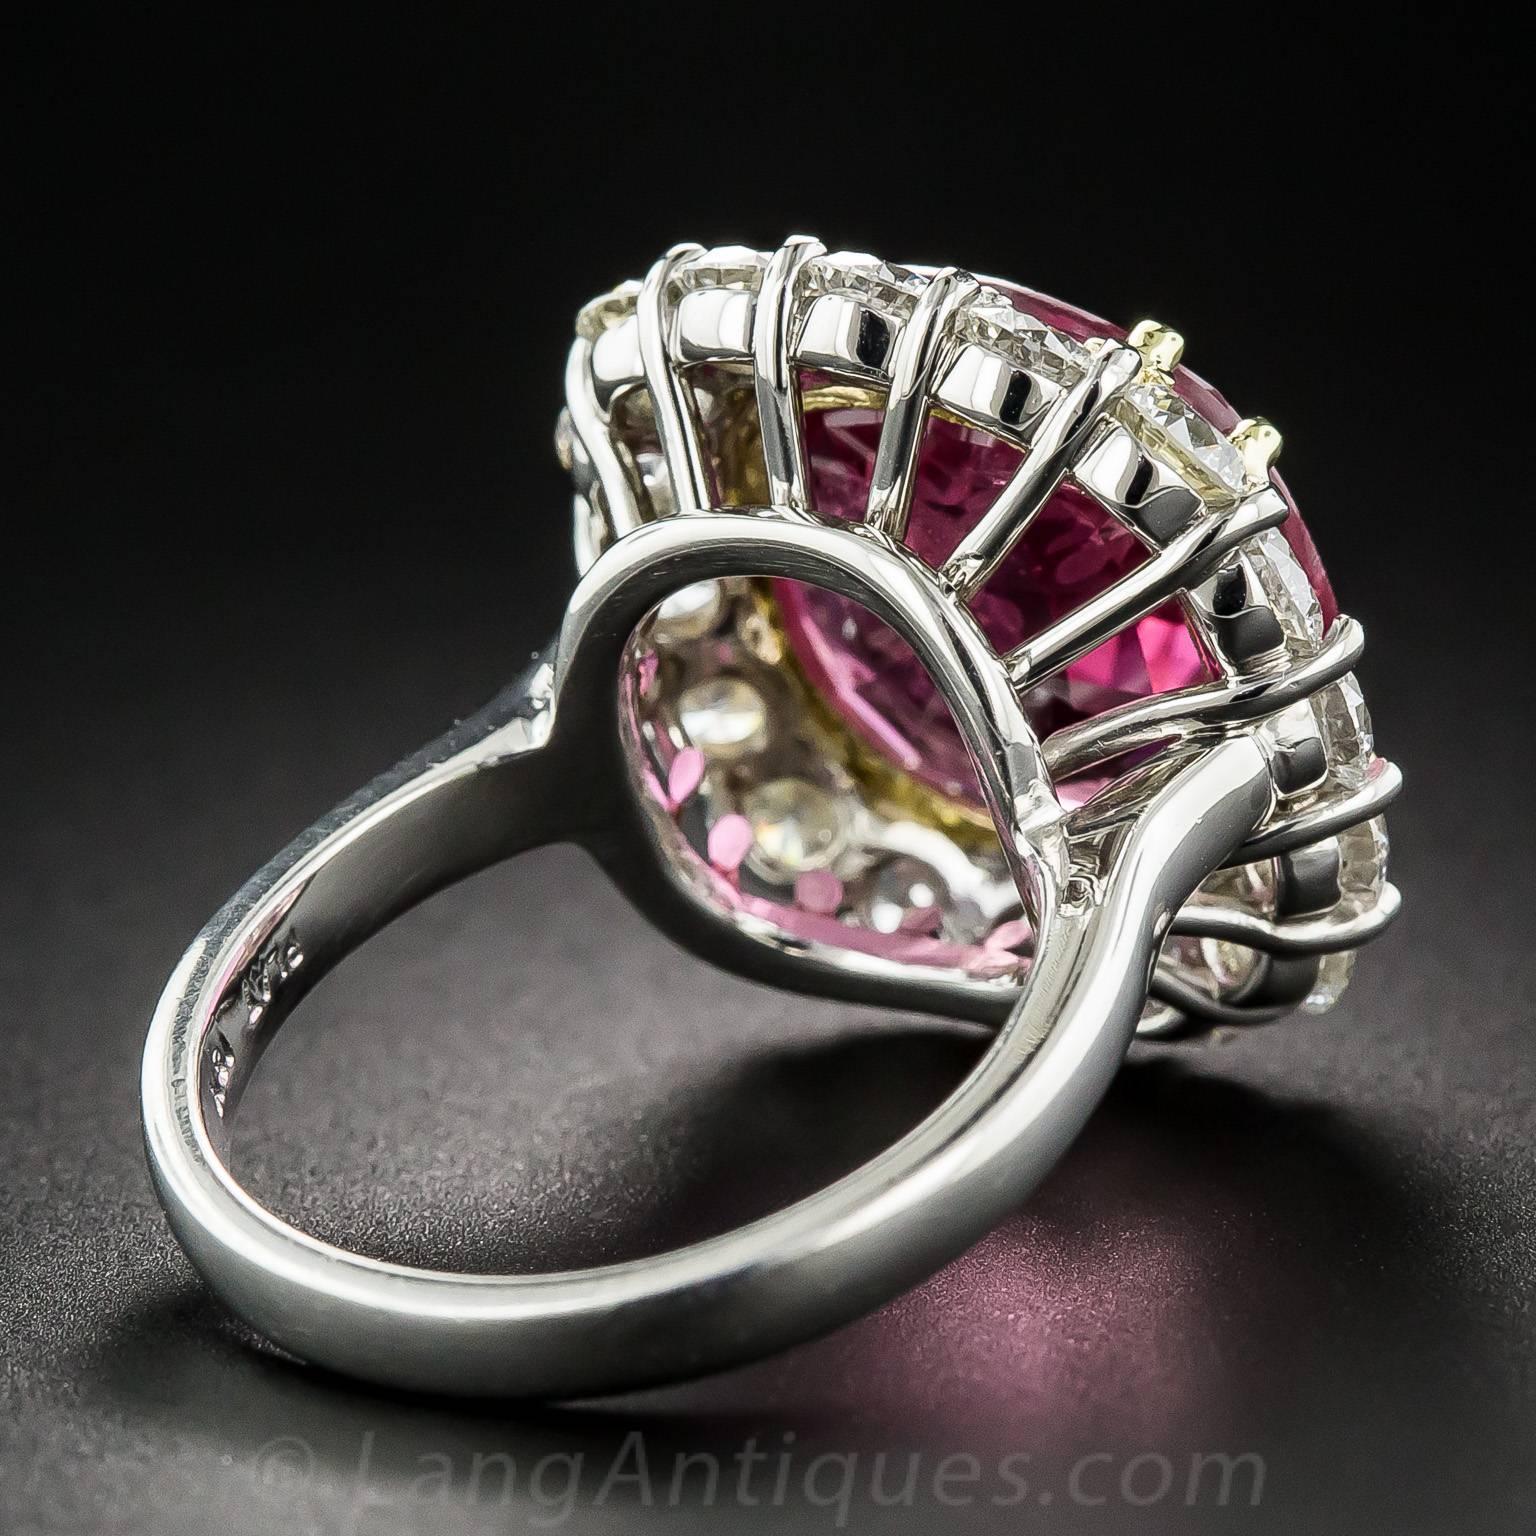 Women's 9.82 Carat Cushion-Cut Ruby and Diamond Ring